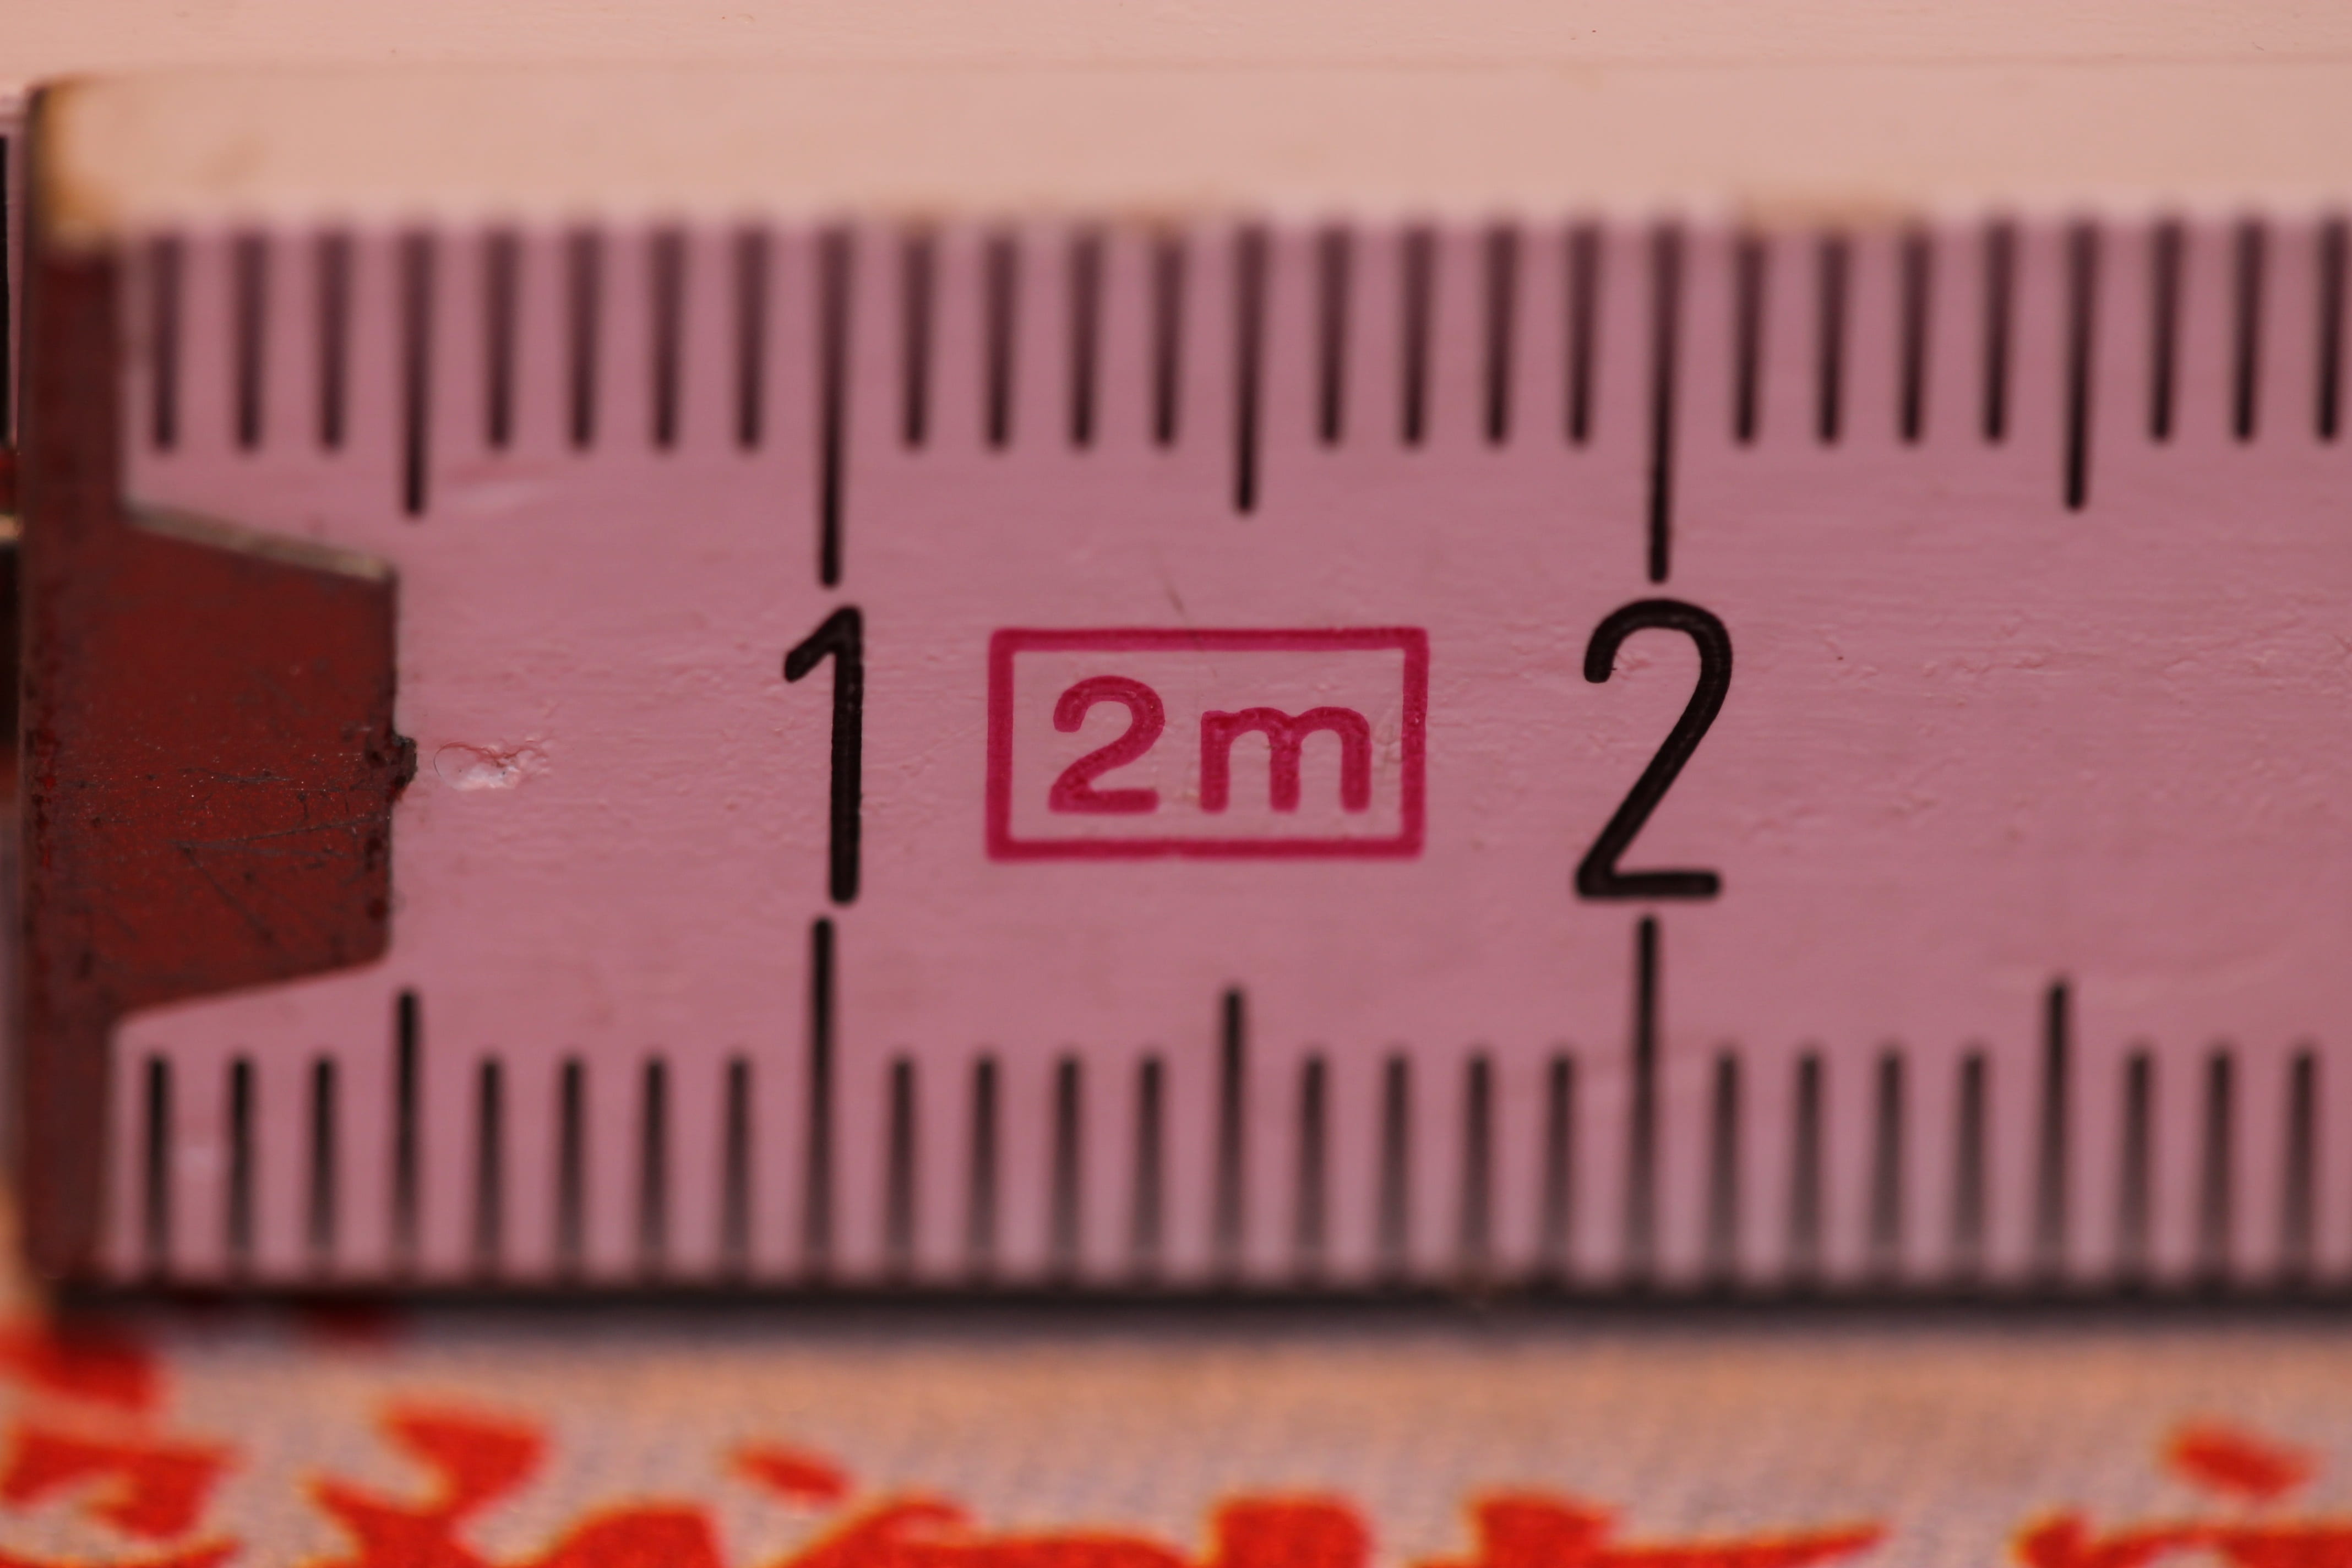 folding rule, bers scale, centimeters, measure, number, unit of measure